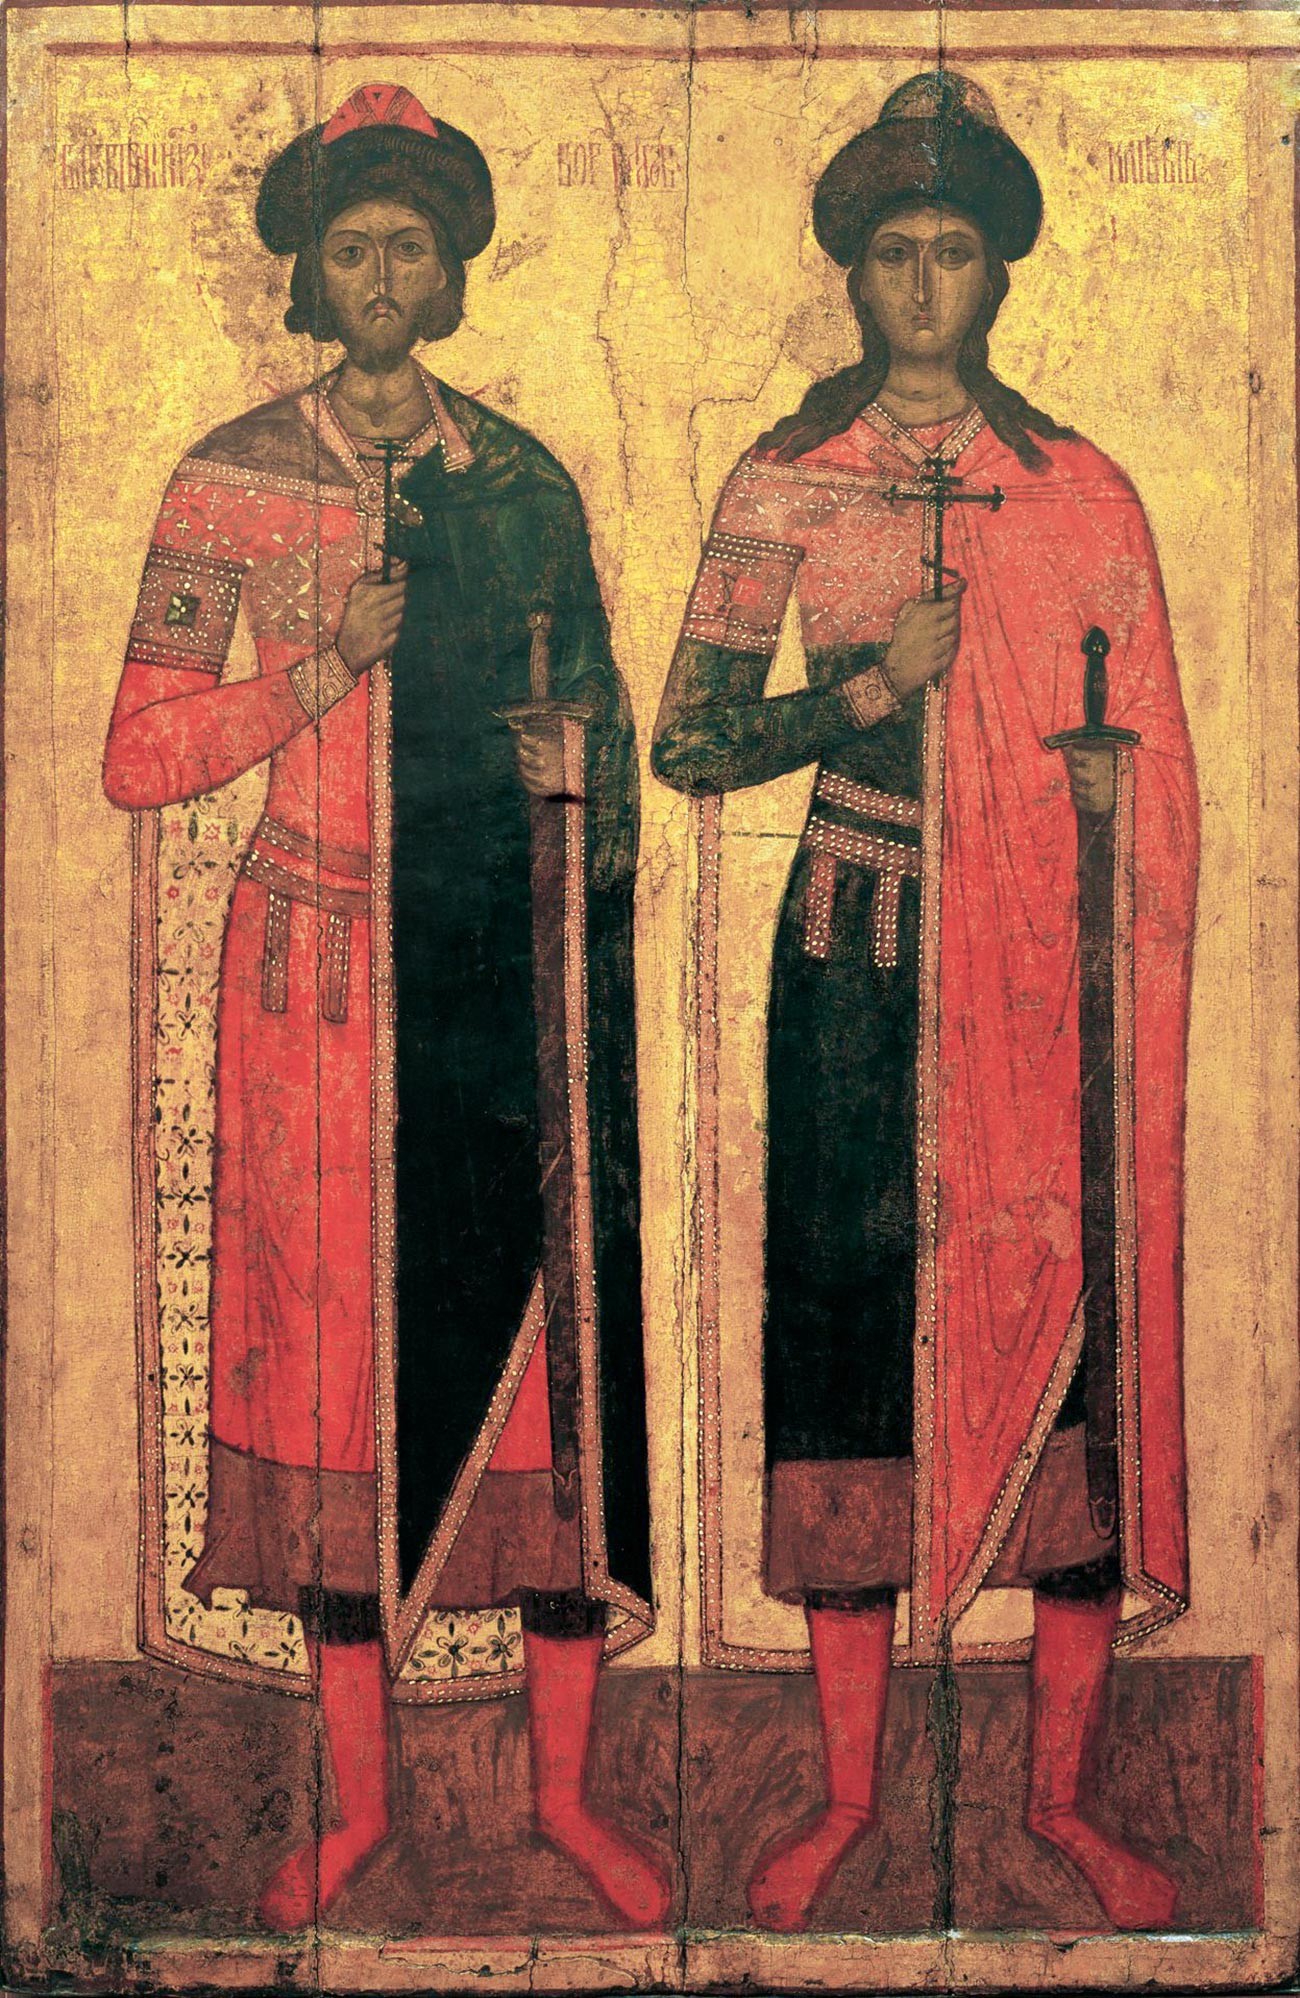 Príncipes Borís e Gleb, por volta de meados do século 14.